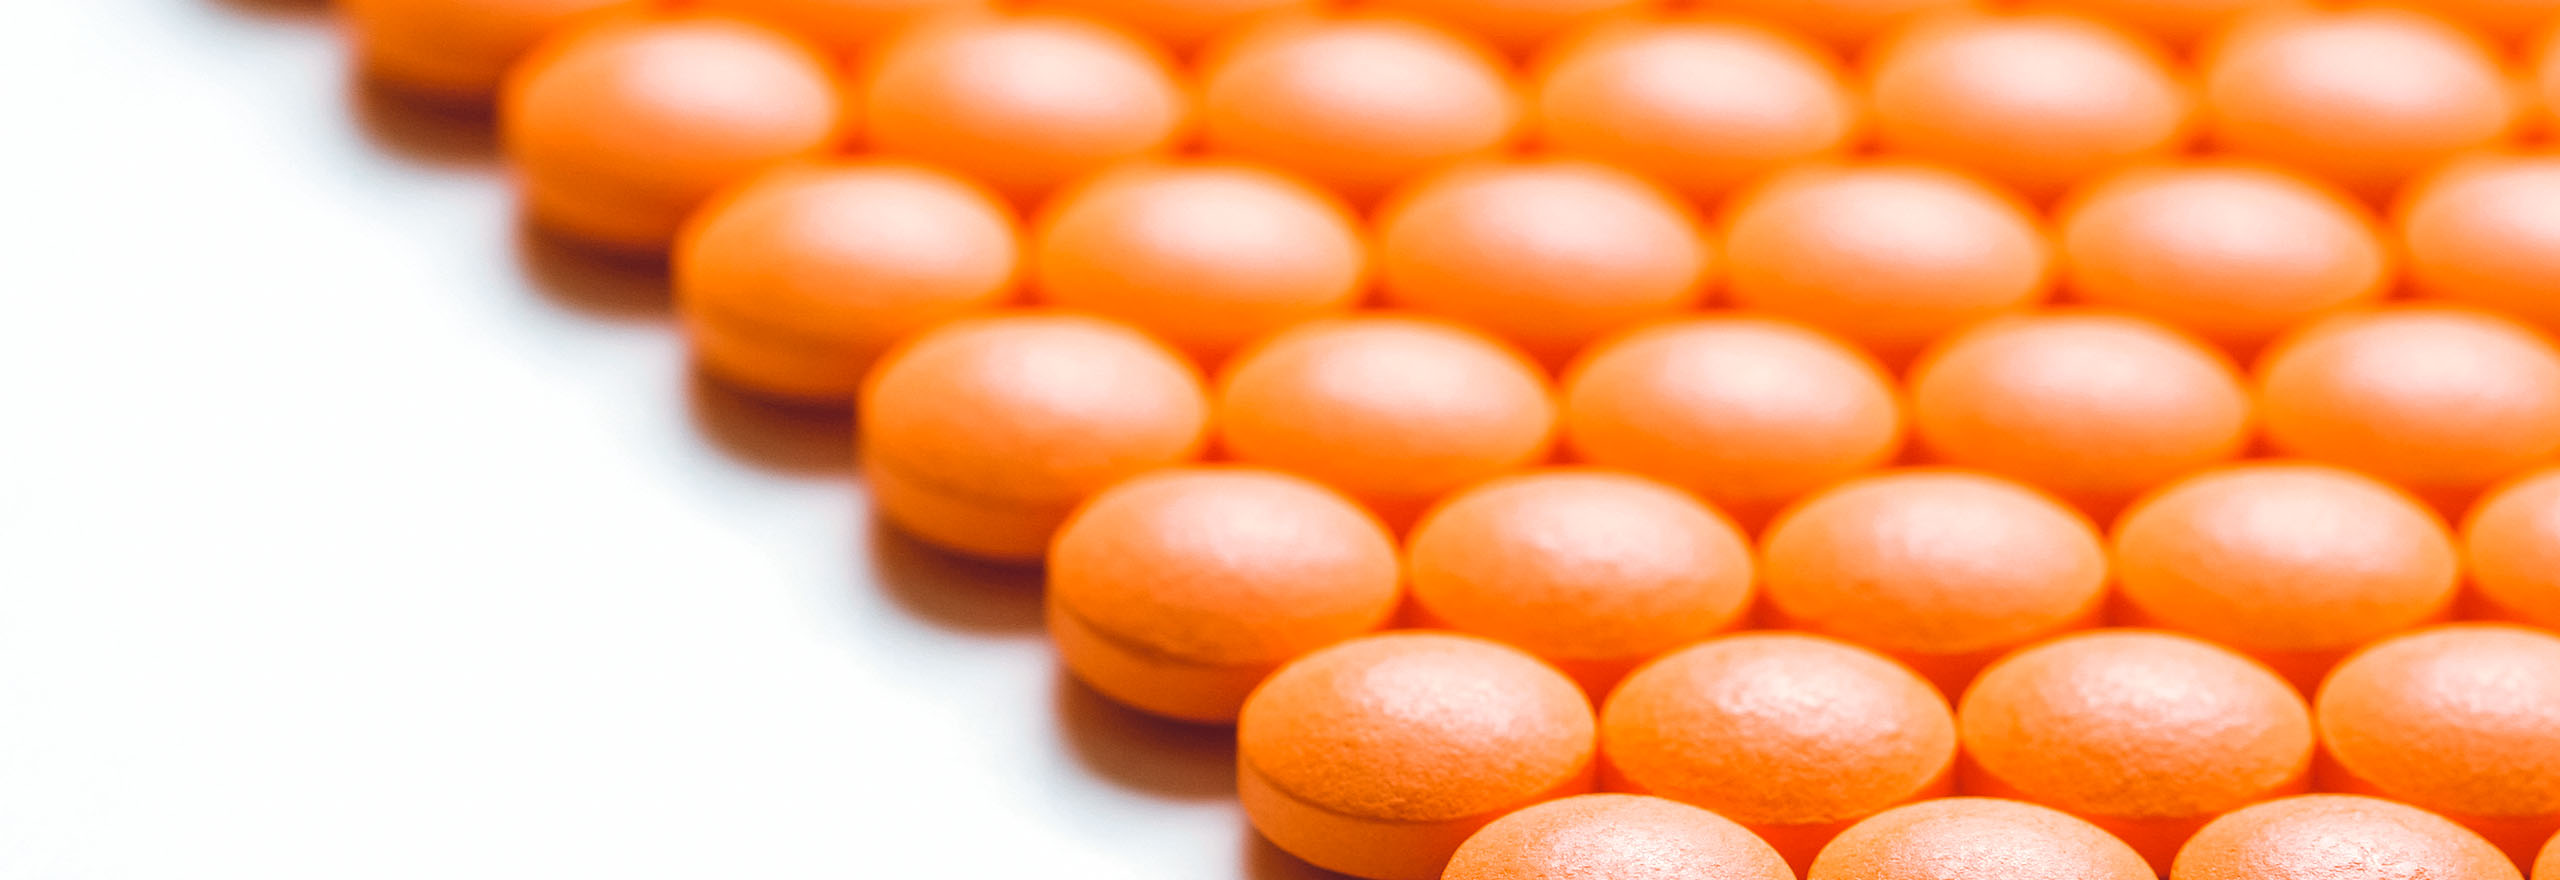 Pills formed using pharmaceutical technology